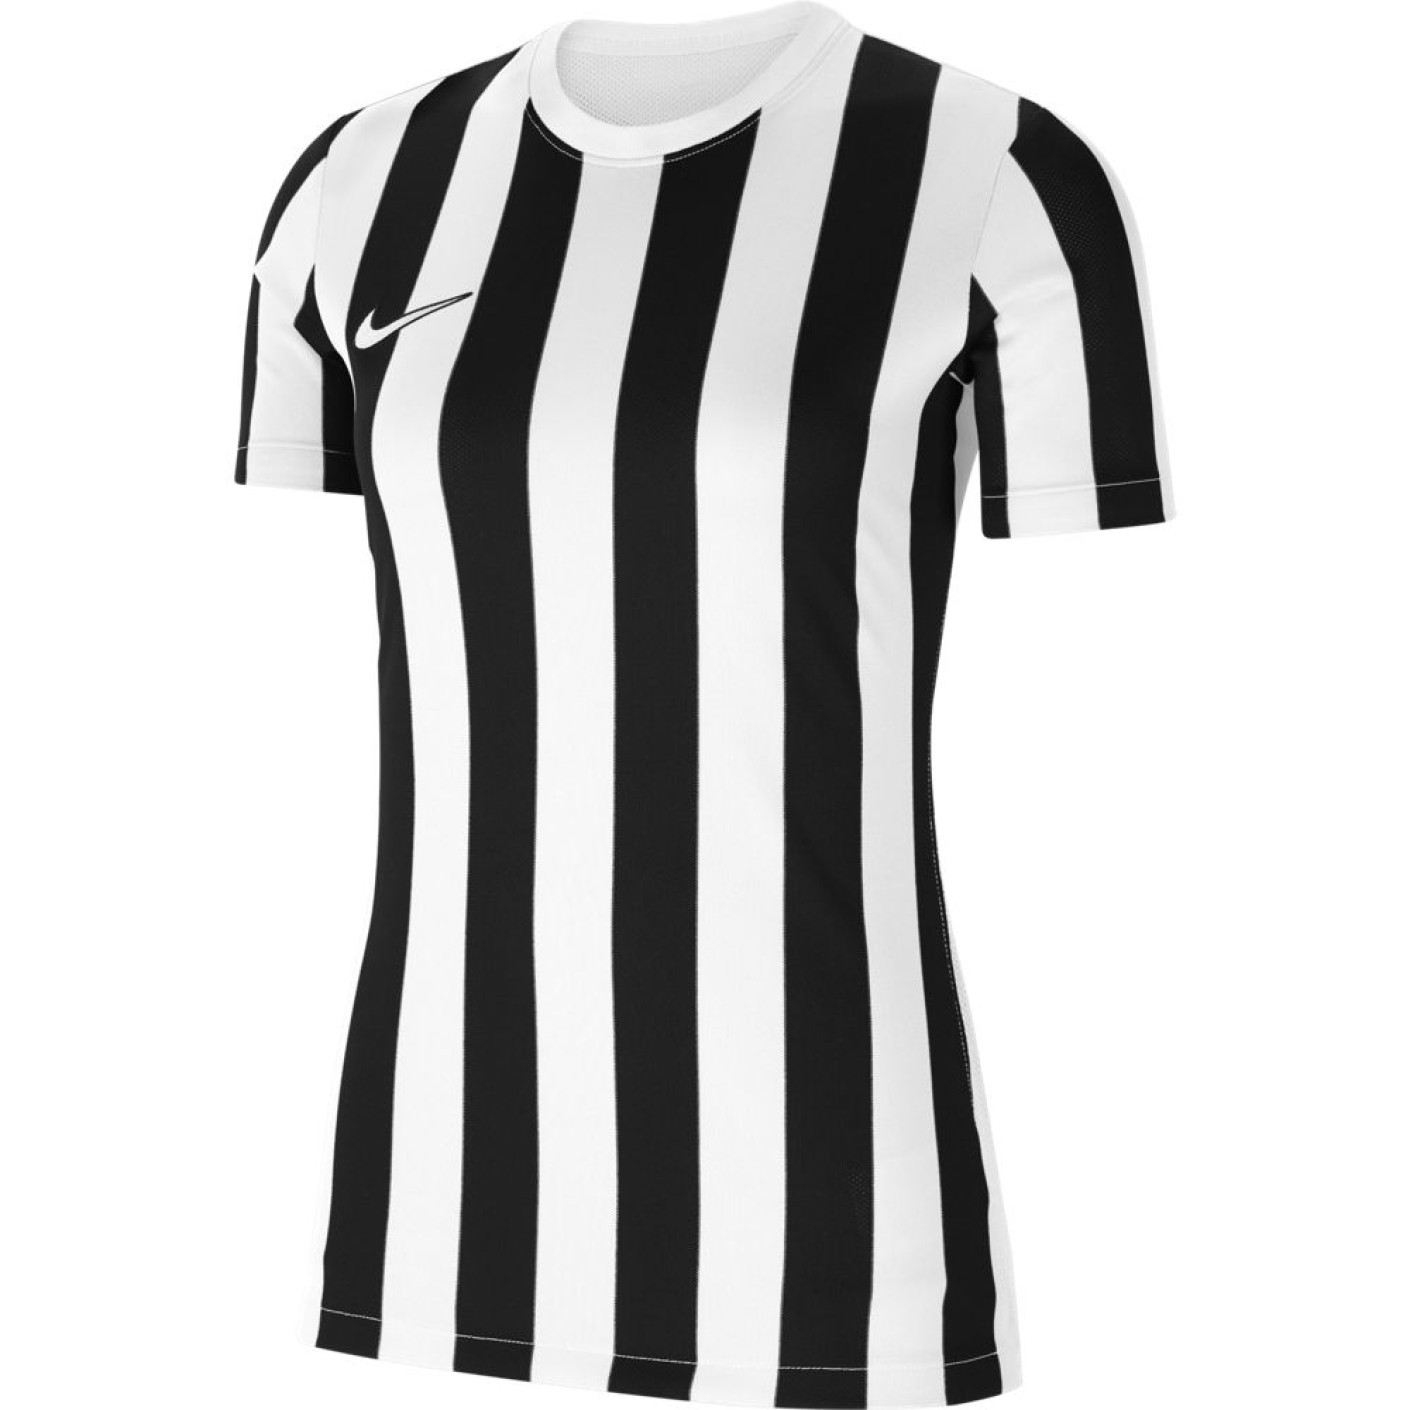 Nike Striped Division IV Voetbalshirt Dames Wit